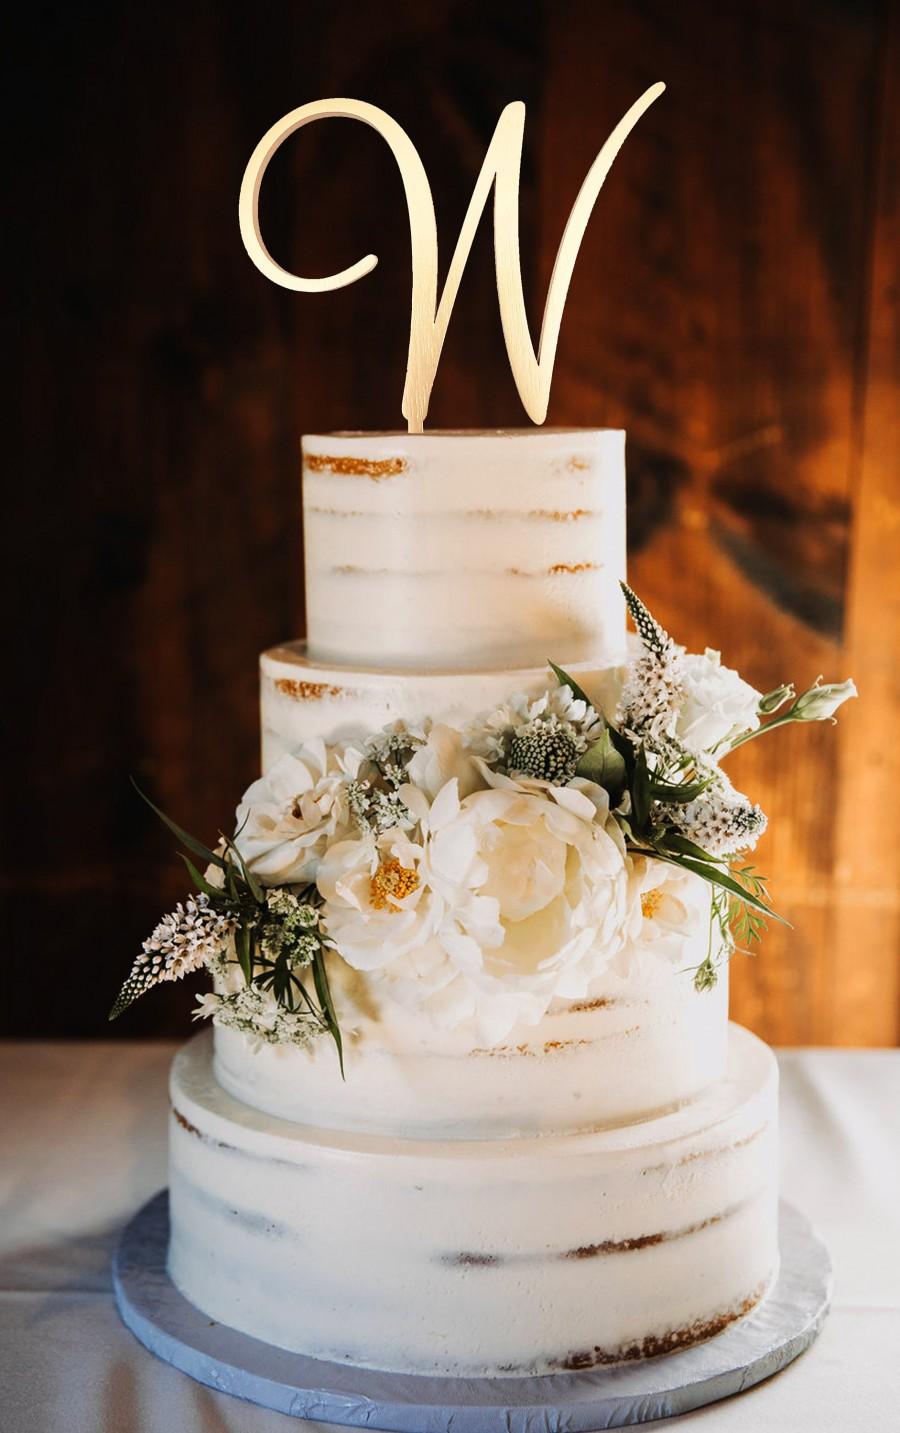 Wedding - W Cake Topper Wedding Cake Topper Gold Personalized Cake Topper w Custom Personalized Wedding Cake Topper initial wedding cake toppers w